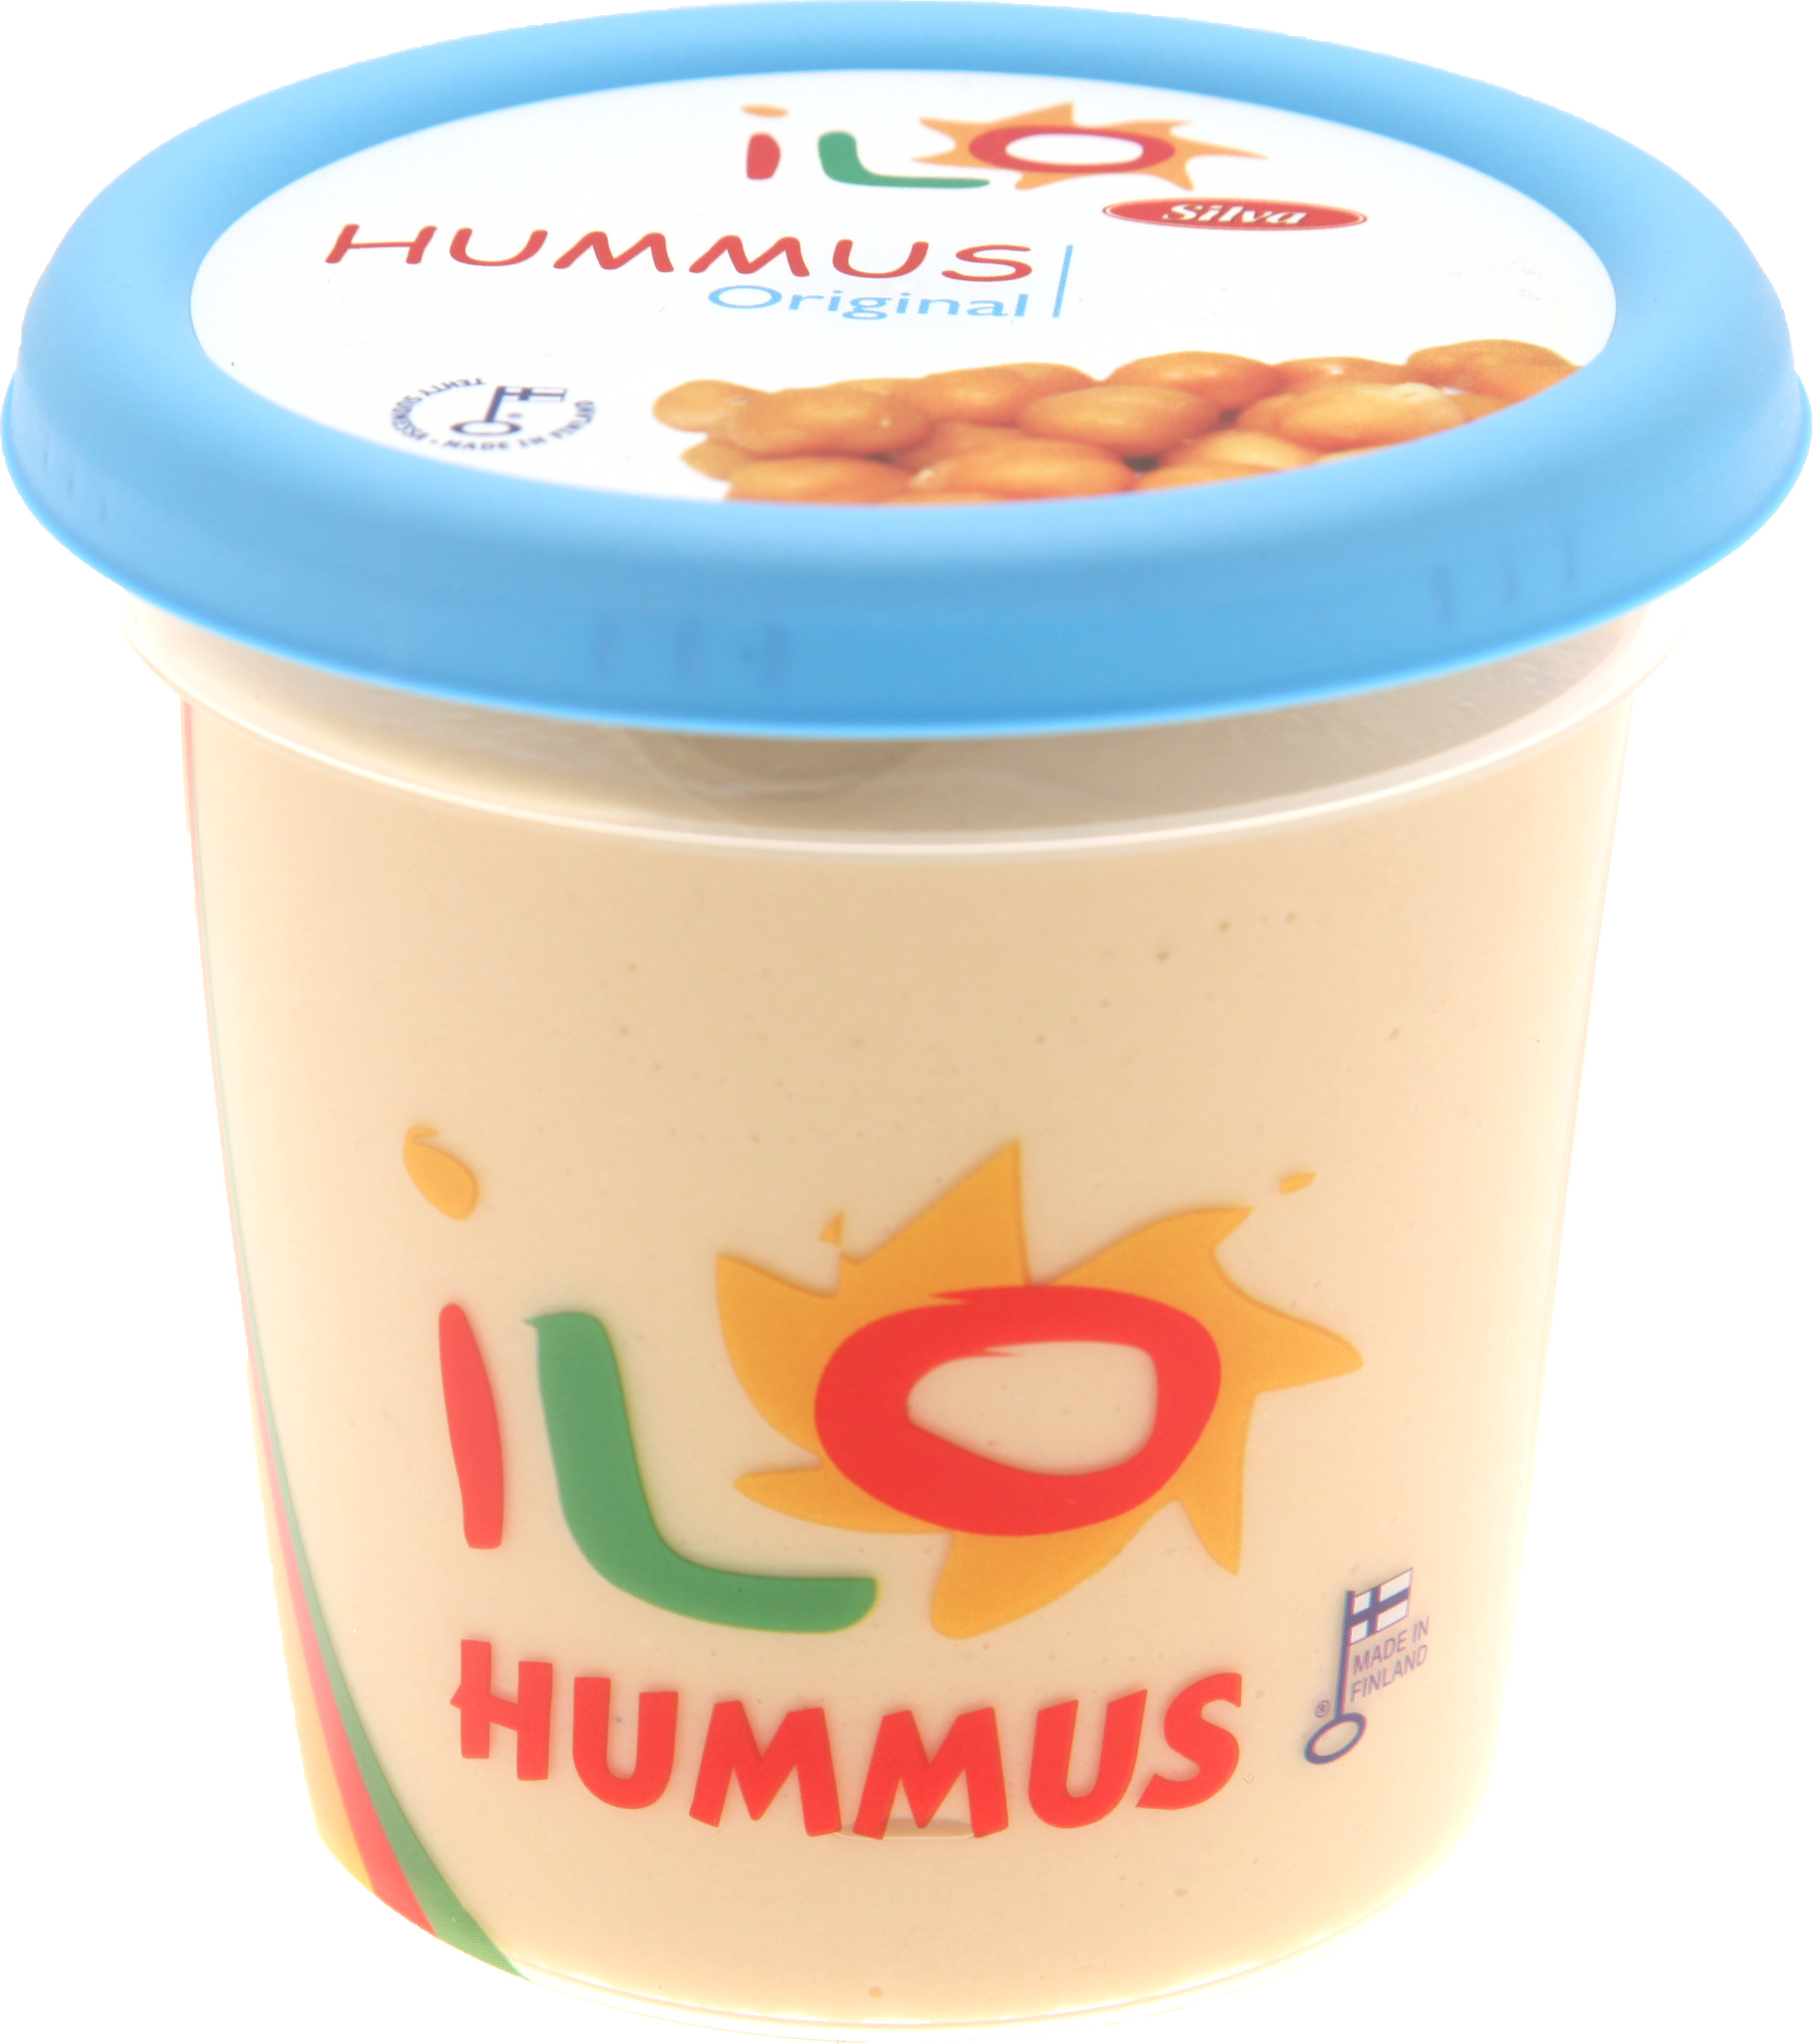 Ilo Hummus Original 350g